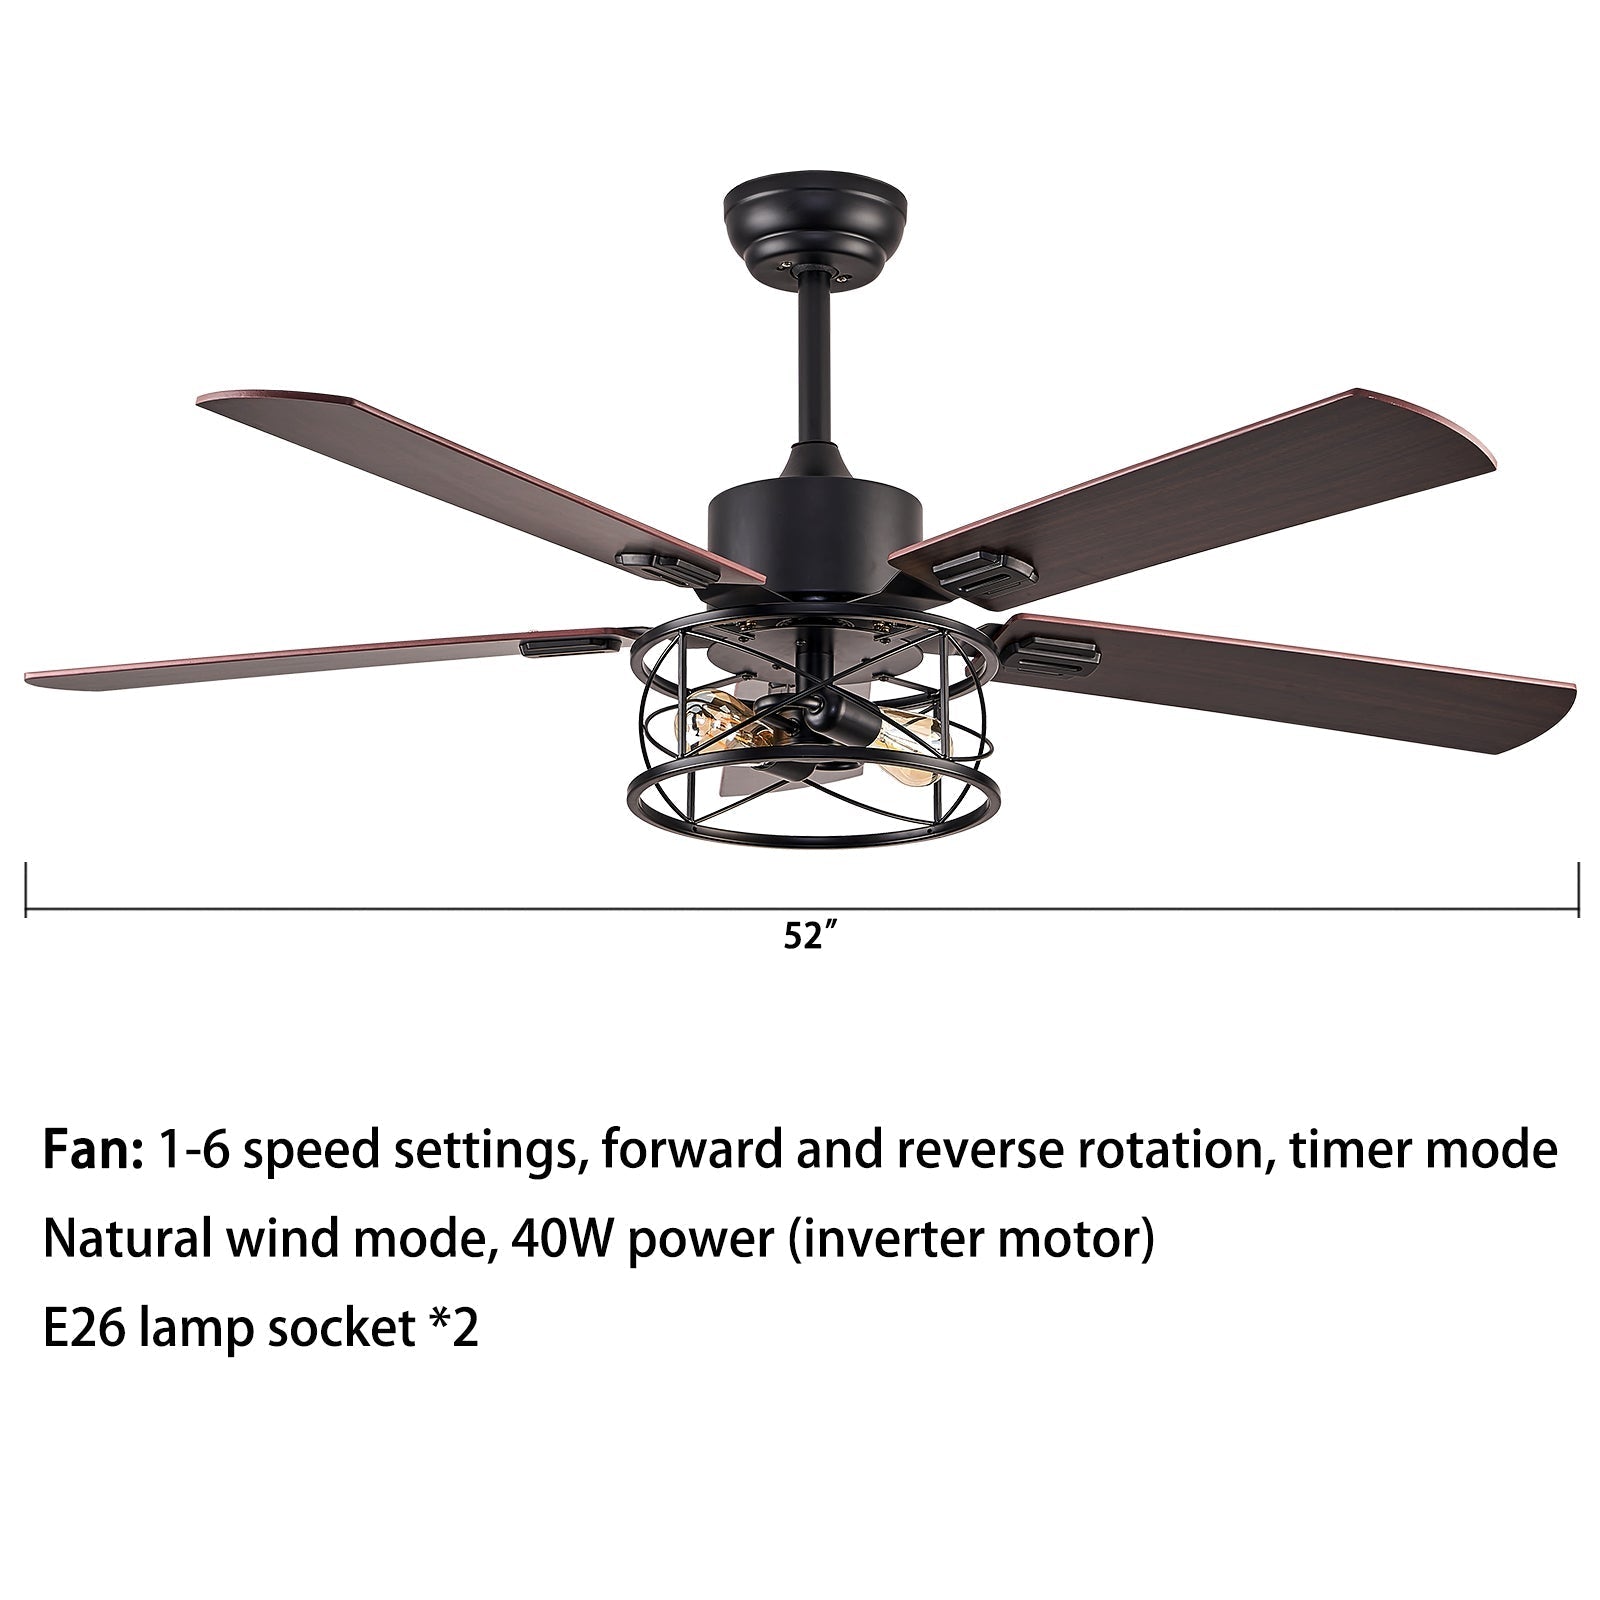 Maeve 52hhhh vintage ceiling Fan light 6-Speed led Natural Wind fan chandelier